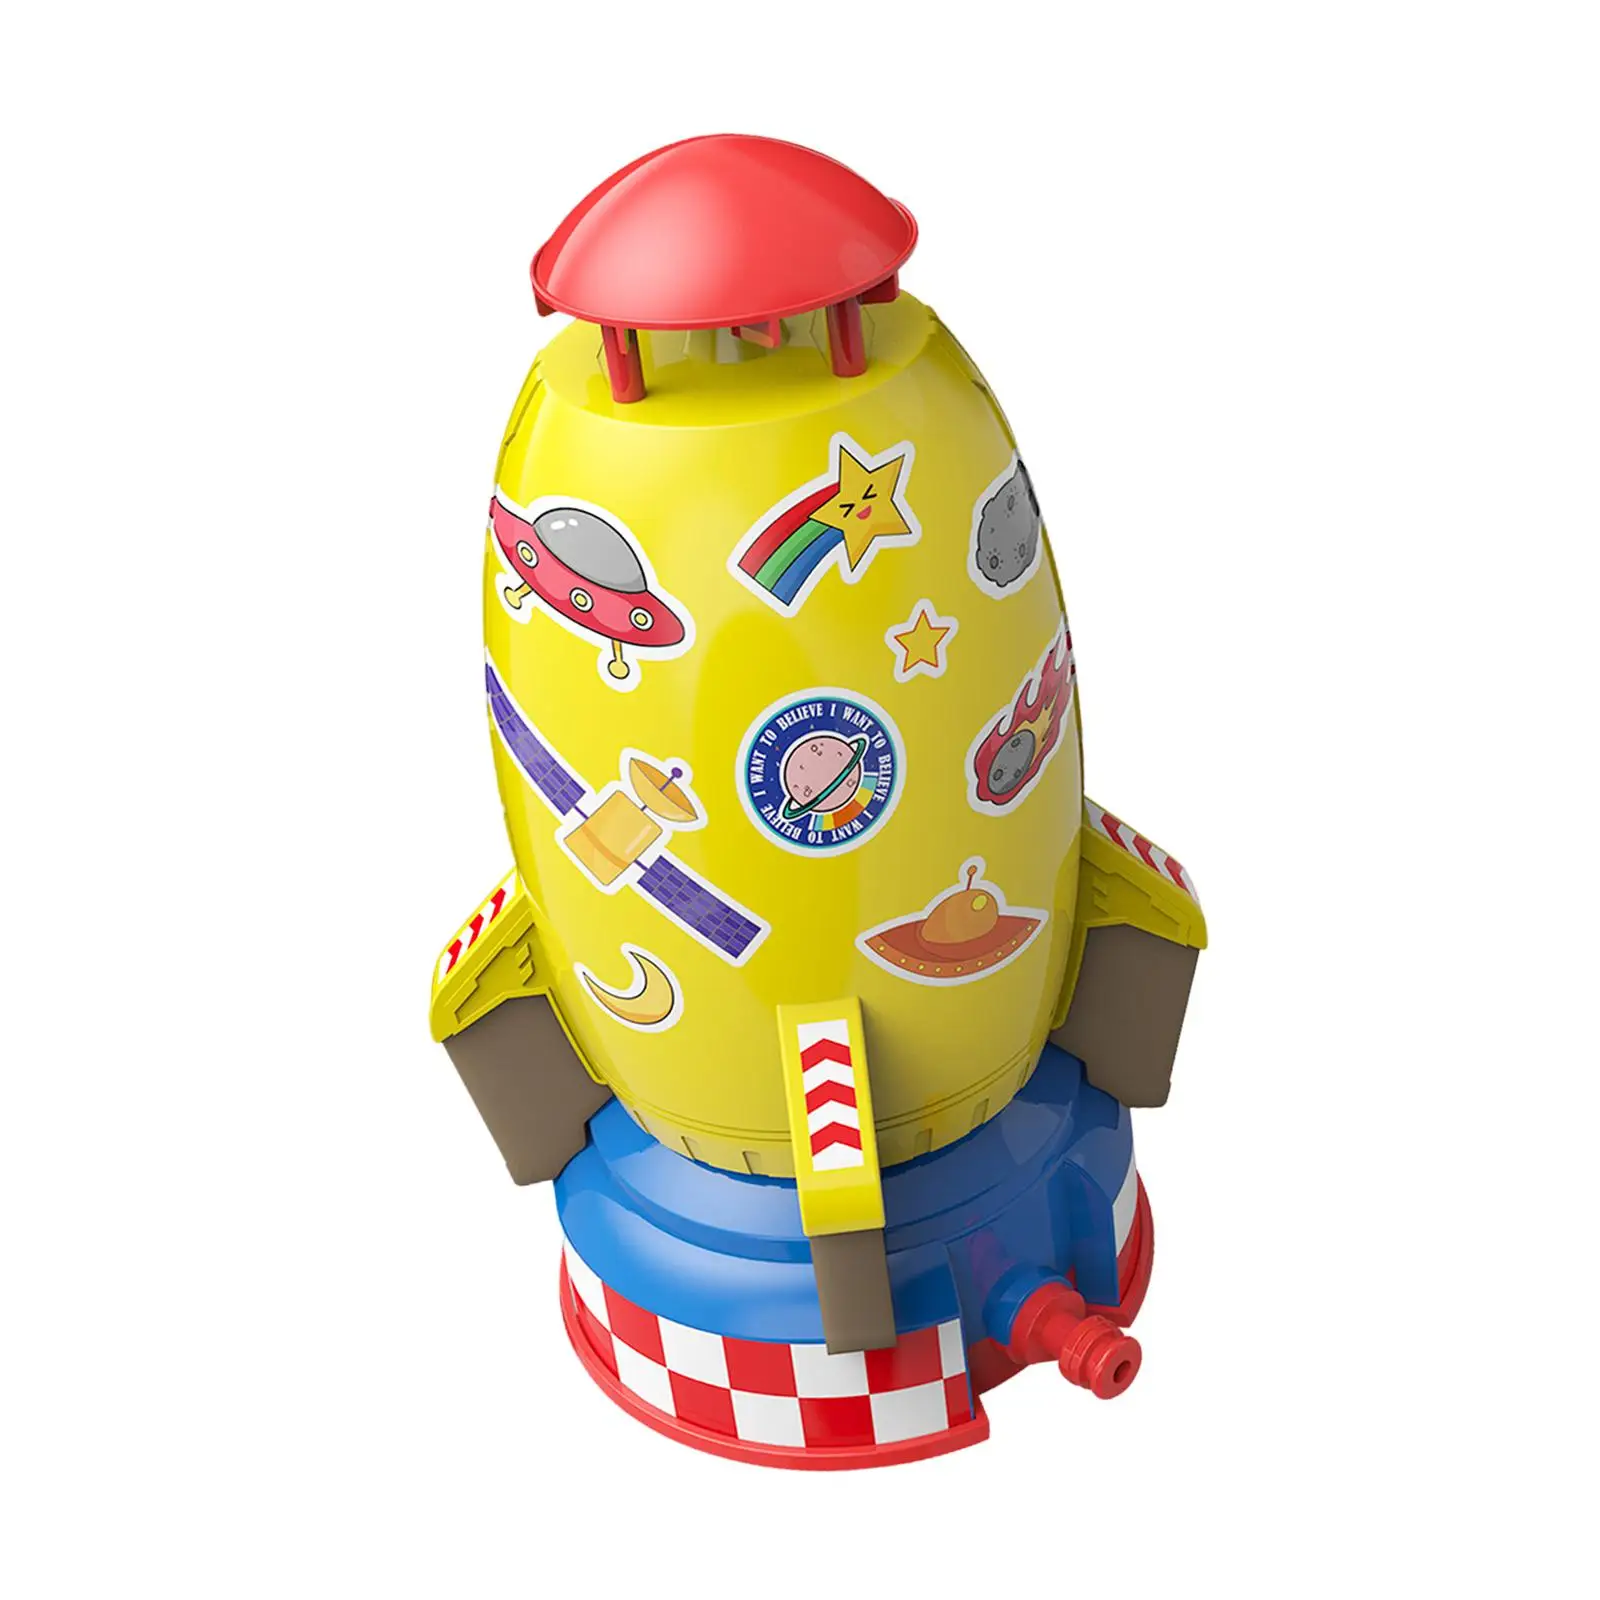 Outdoor Rocket Water Pressure Lift Sprinkler Toy Space Rocket Shape for Boys